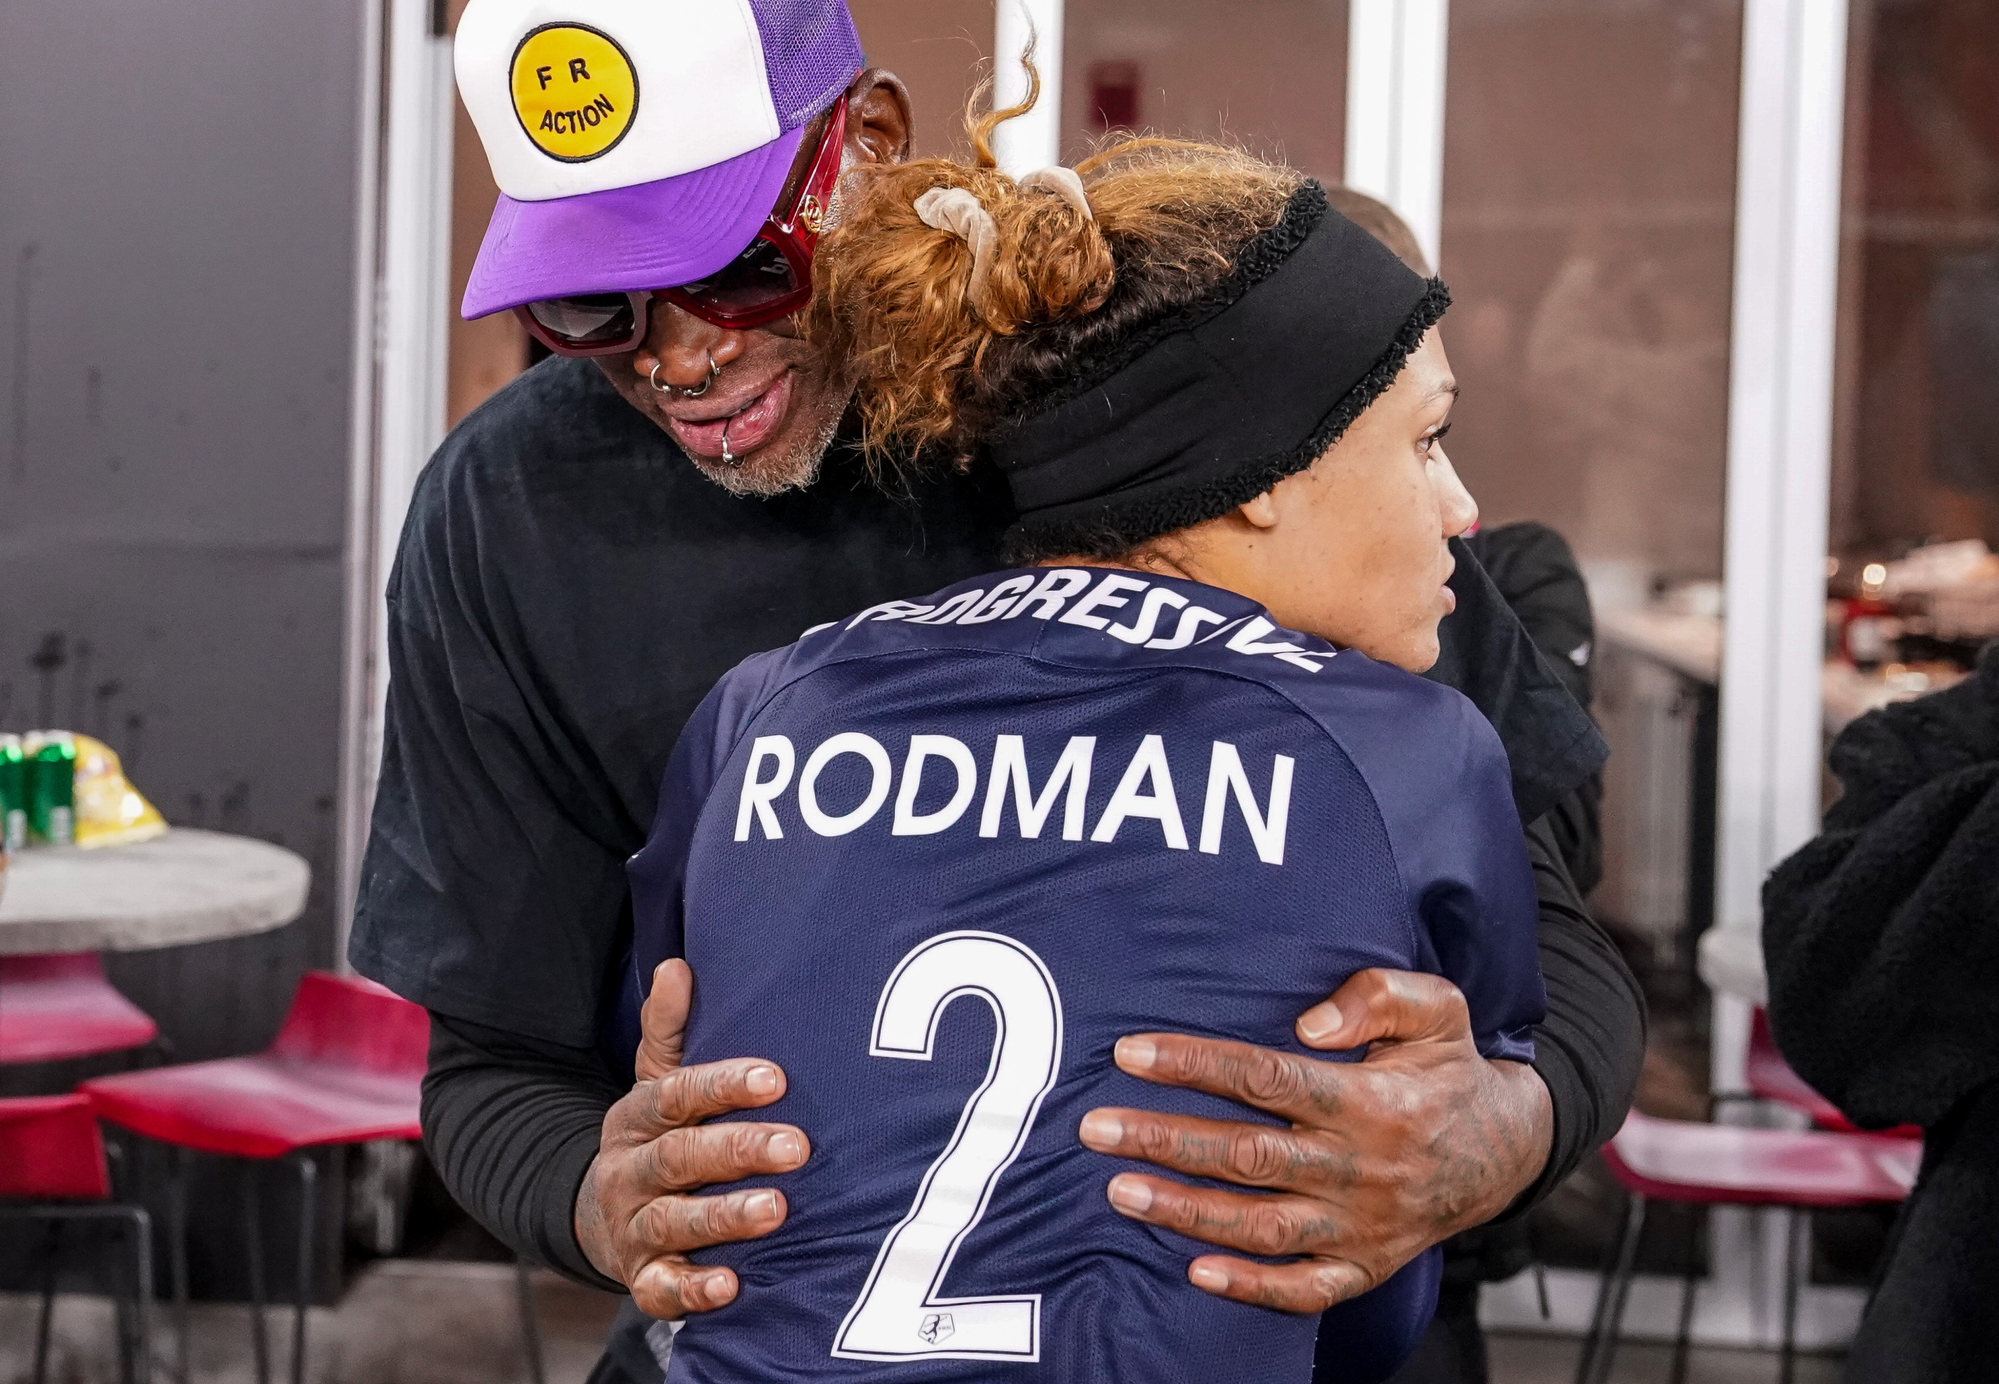 Dennis Rodman 2022: Bio, Net Worth, and Endorsements